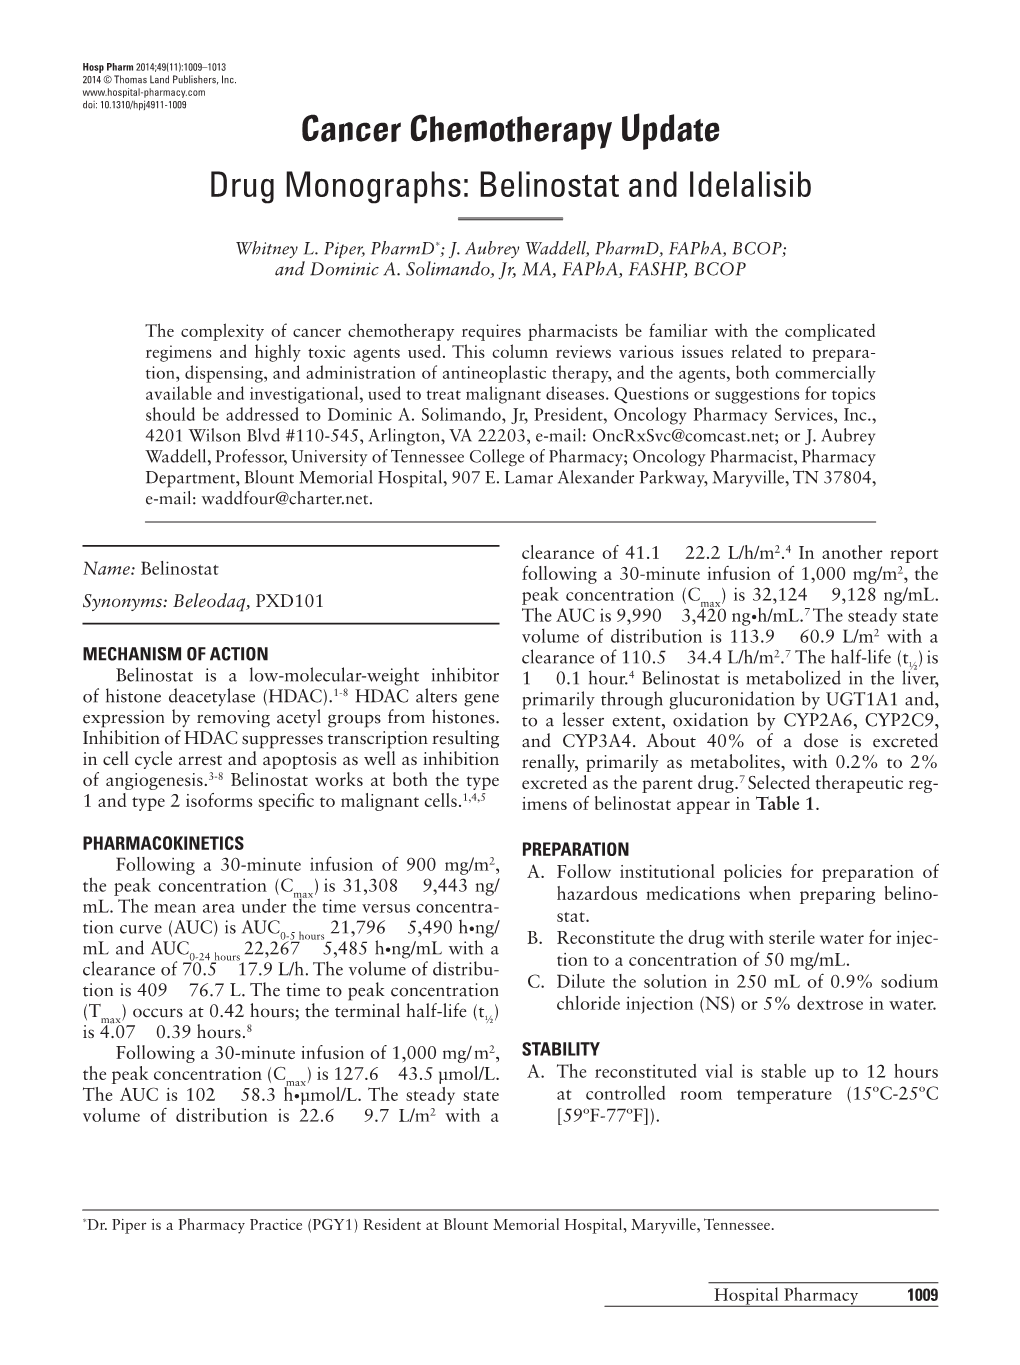 Cancer Chemotherapy Update Drug Monographs: Belinostat and Idelalisib